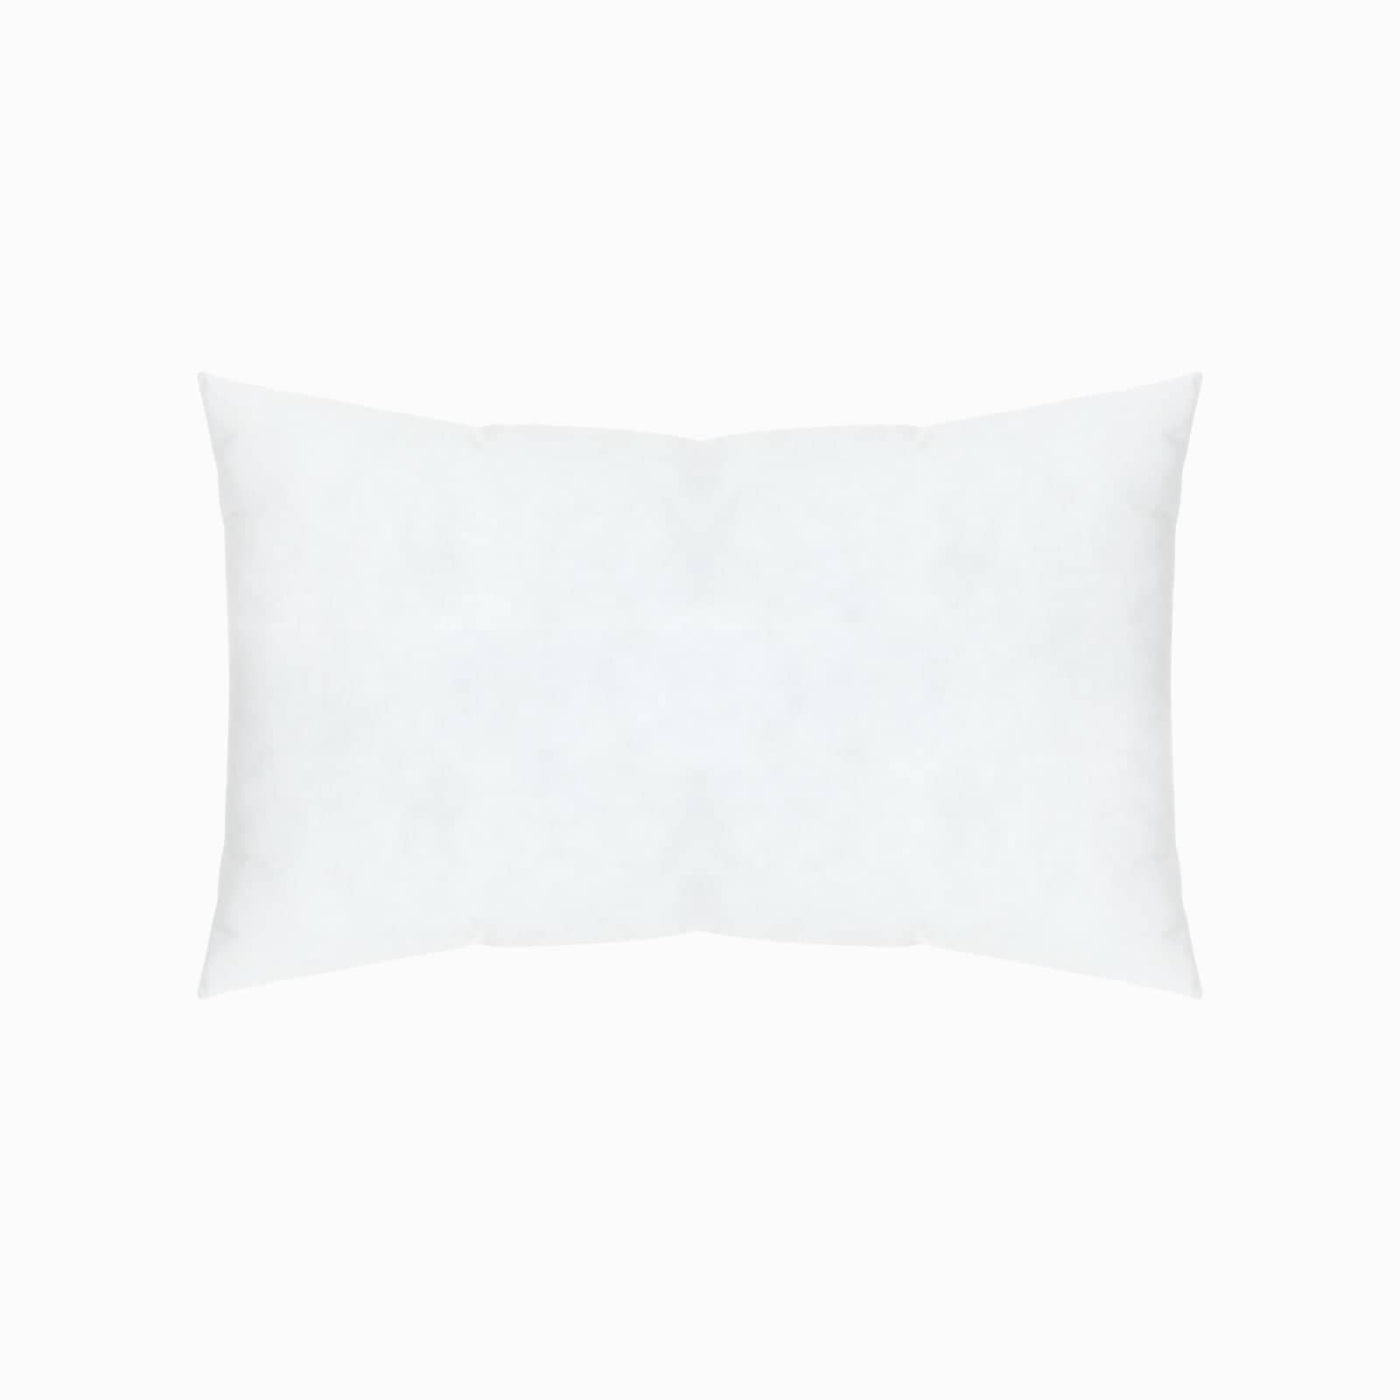 Large Rectangular Cushion Pad, White, 40x60 cm - 1